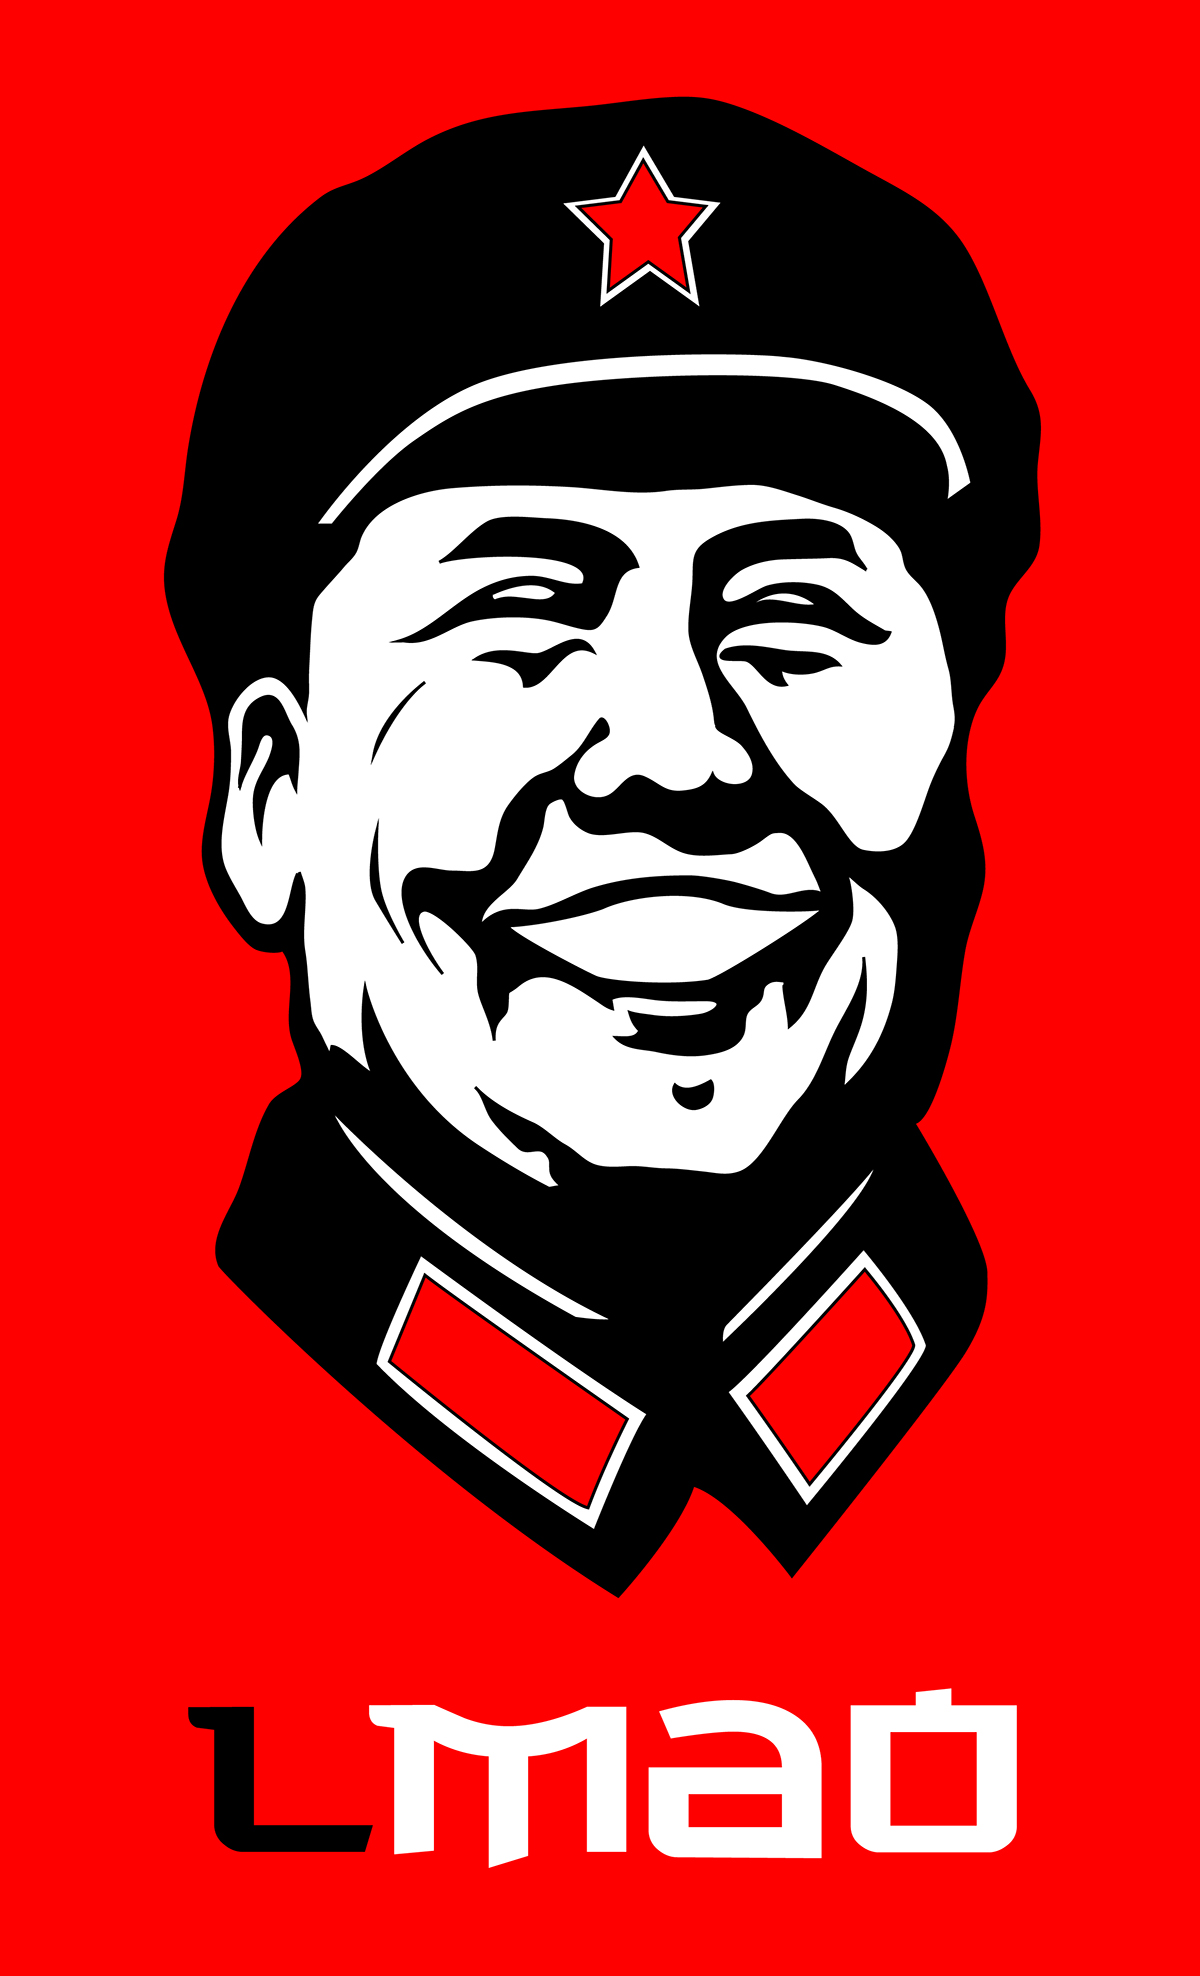 Hitler Mao dictator porpaganda lahore nazi